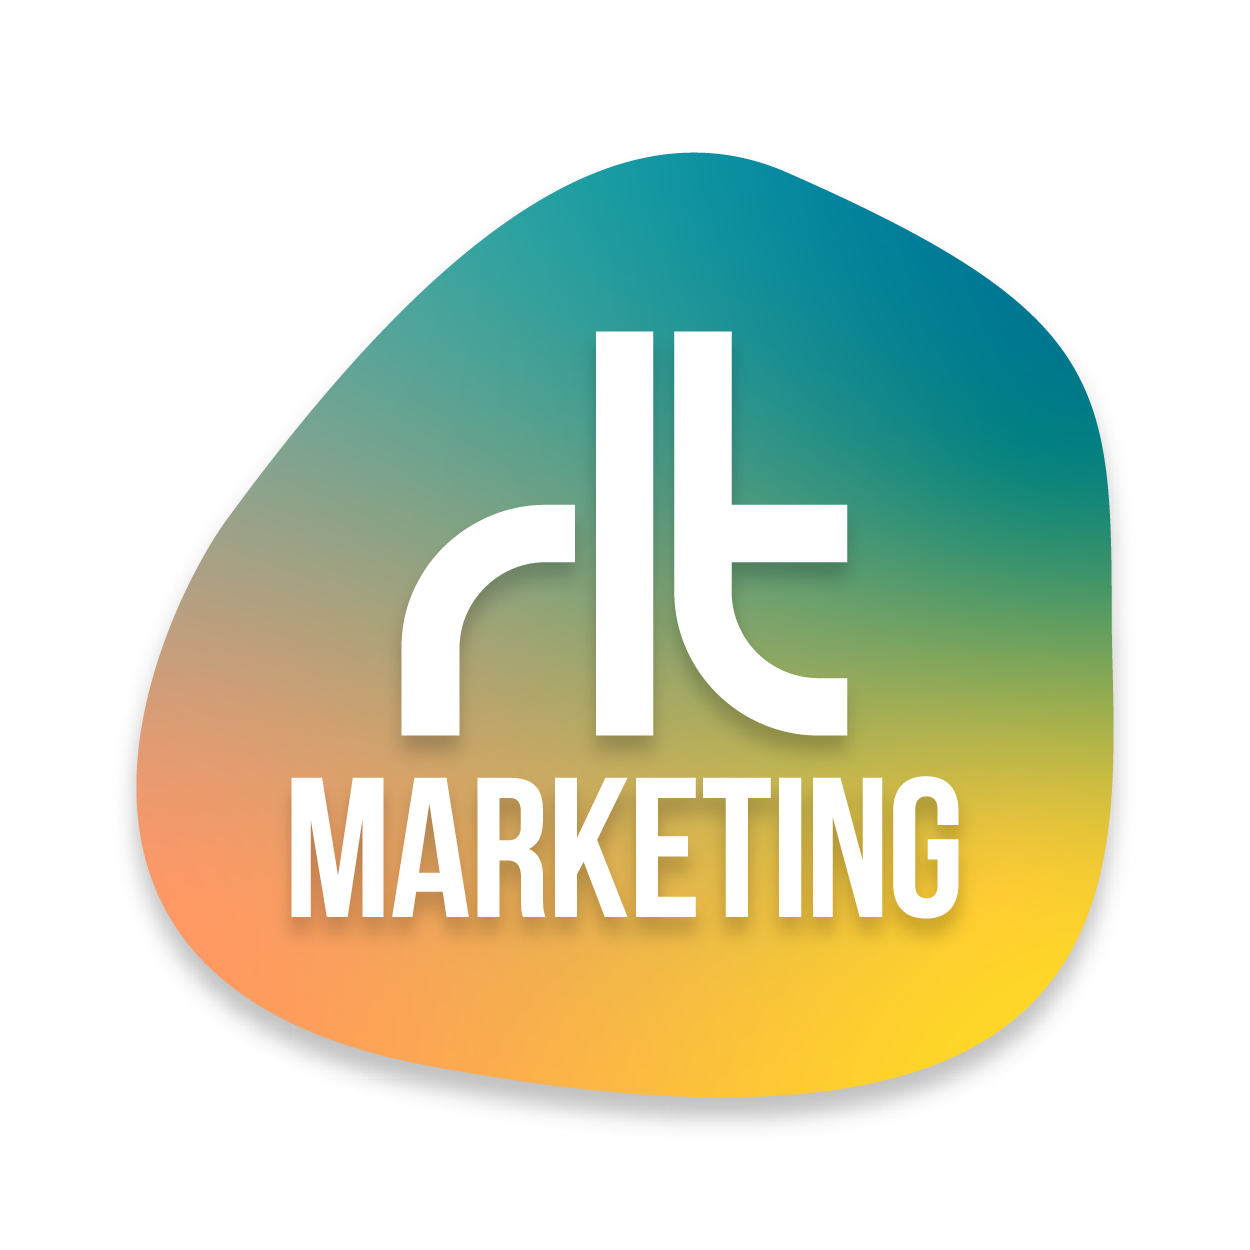 RTL_Marketing-06